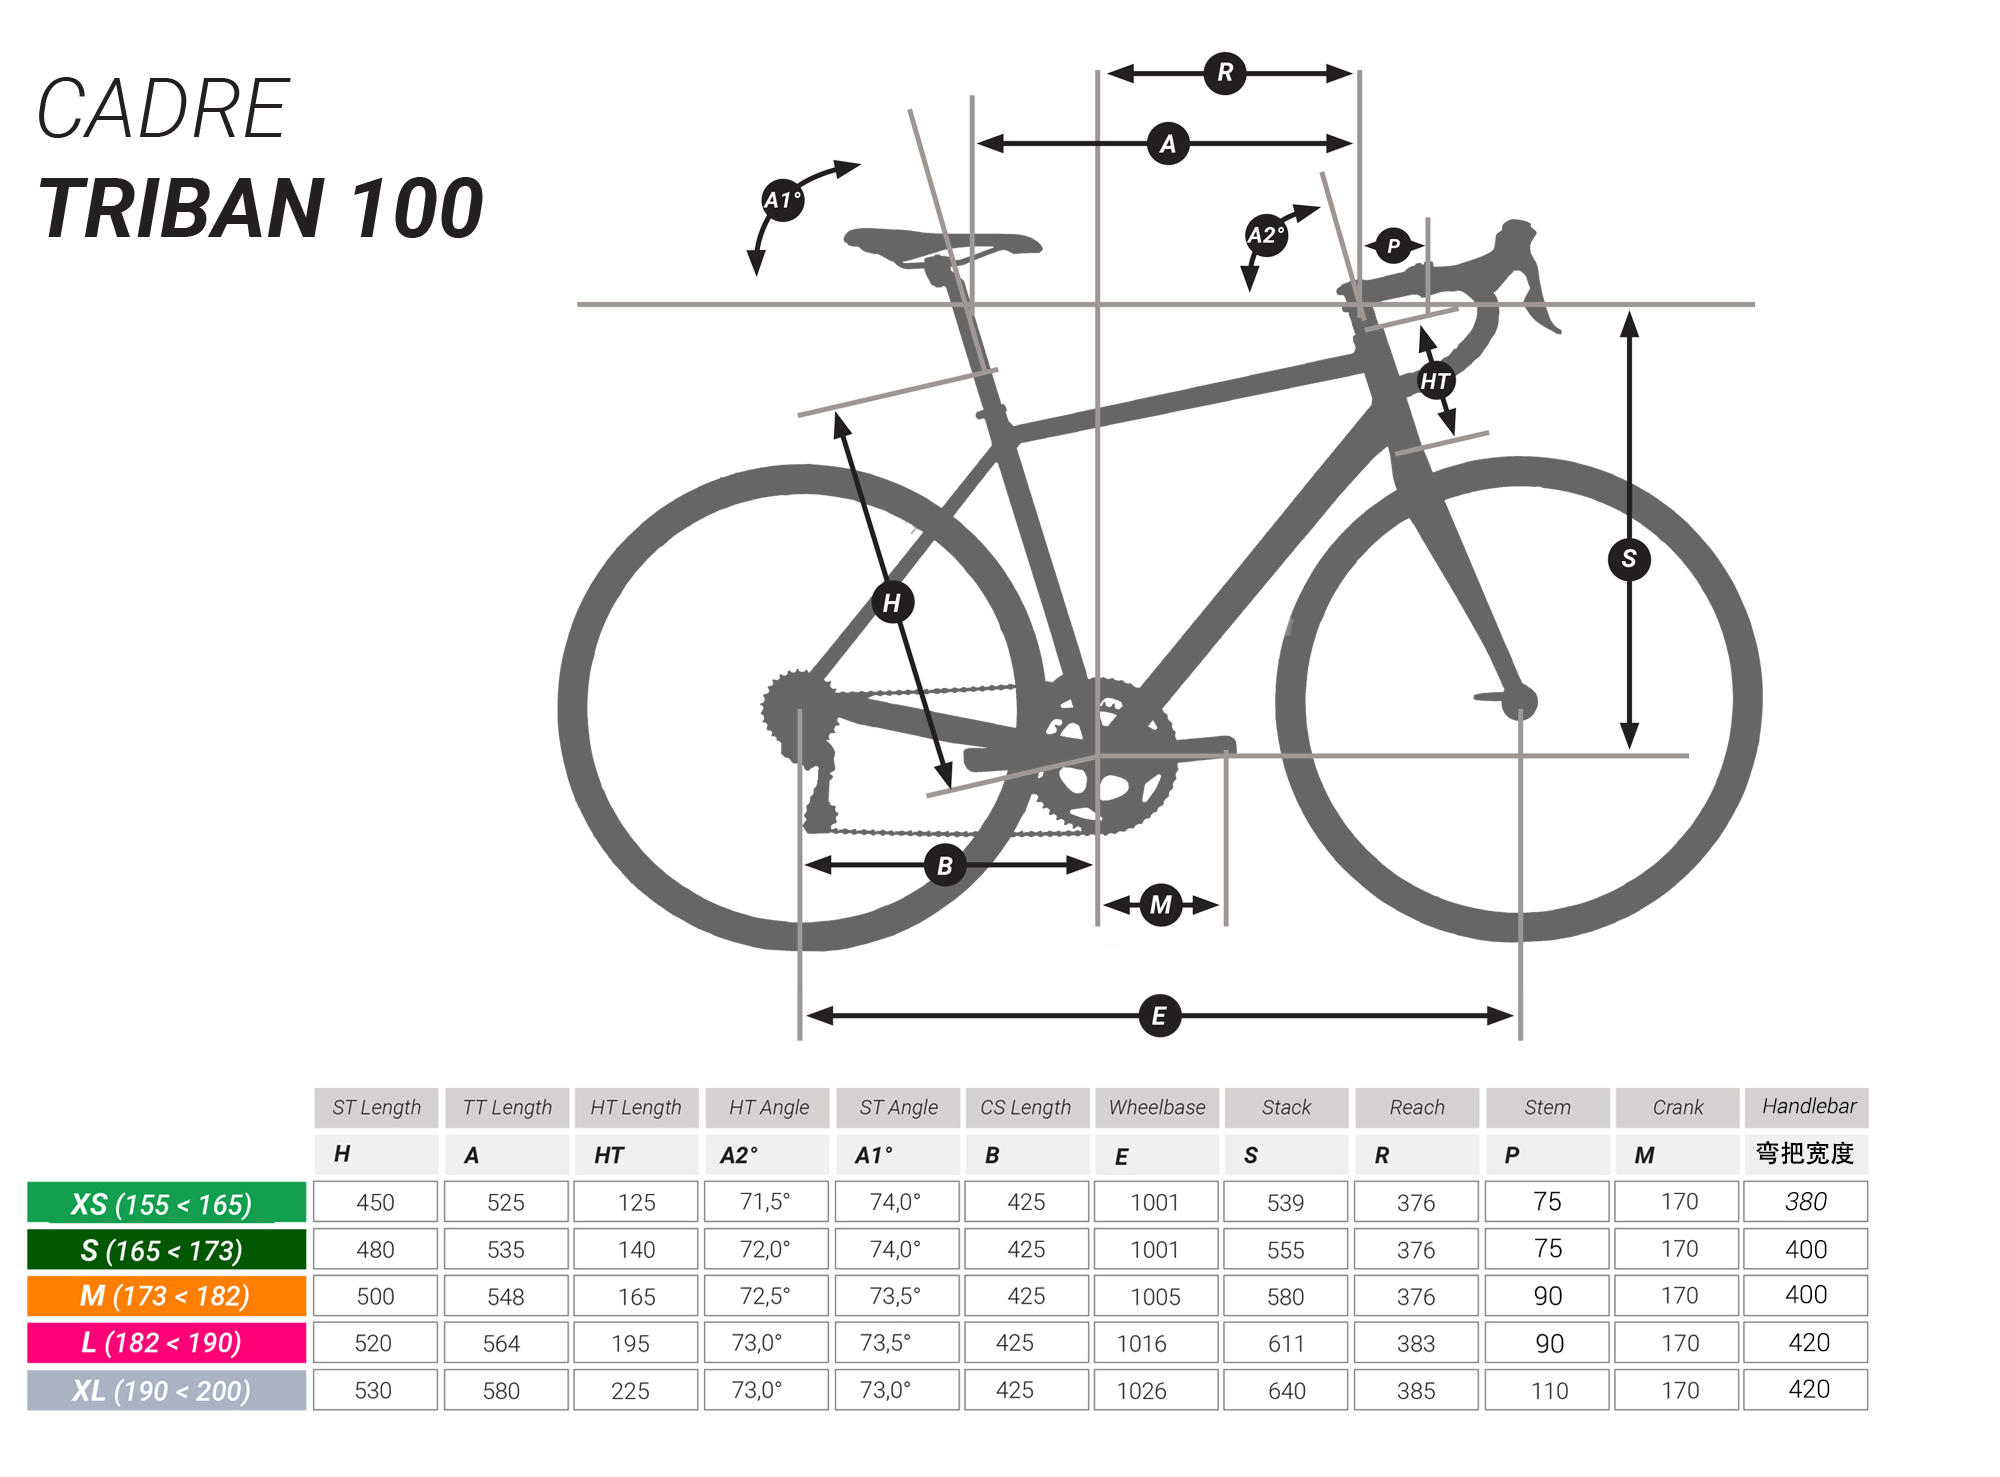 Road Bike Tyre Size Chart